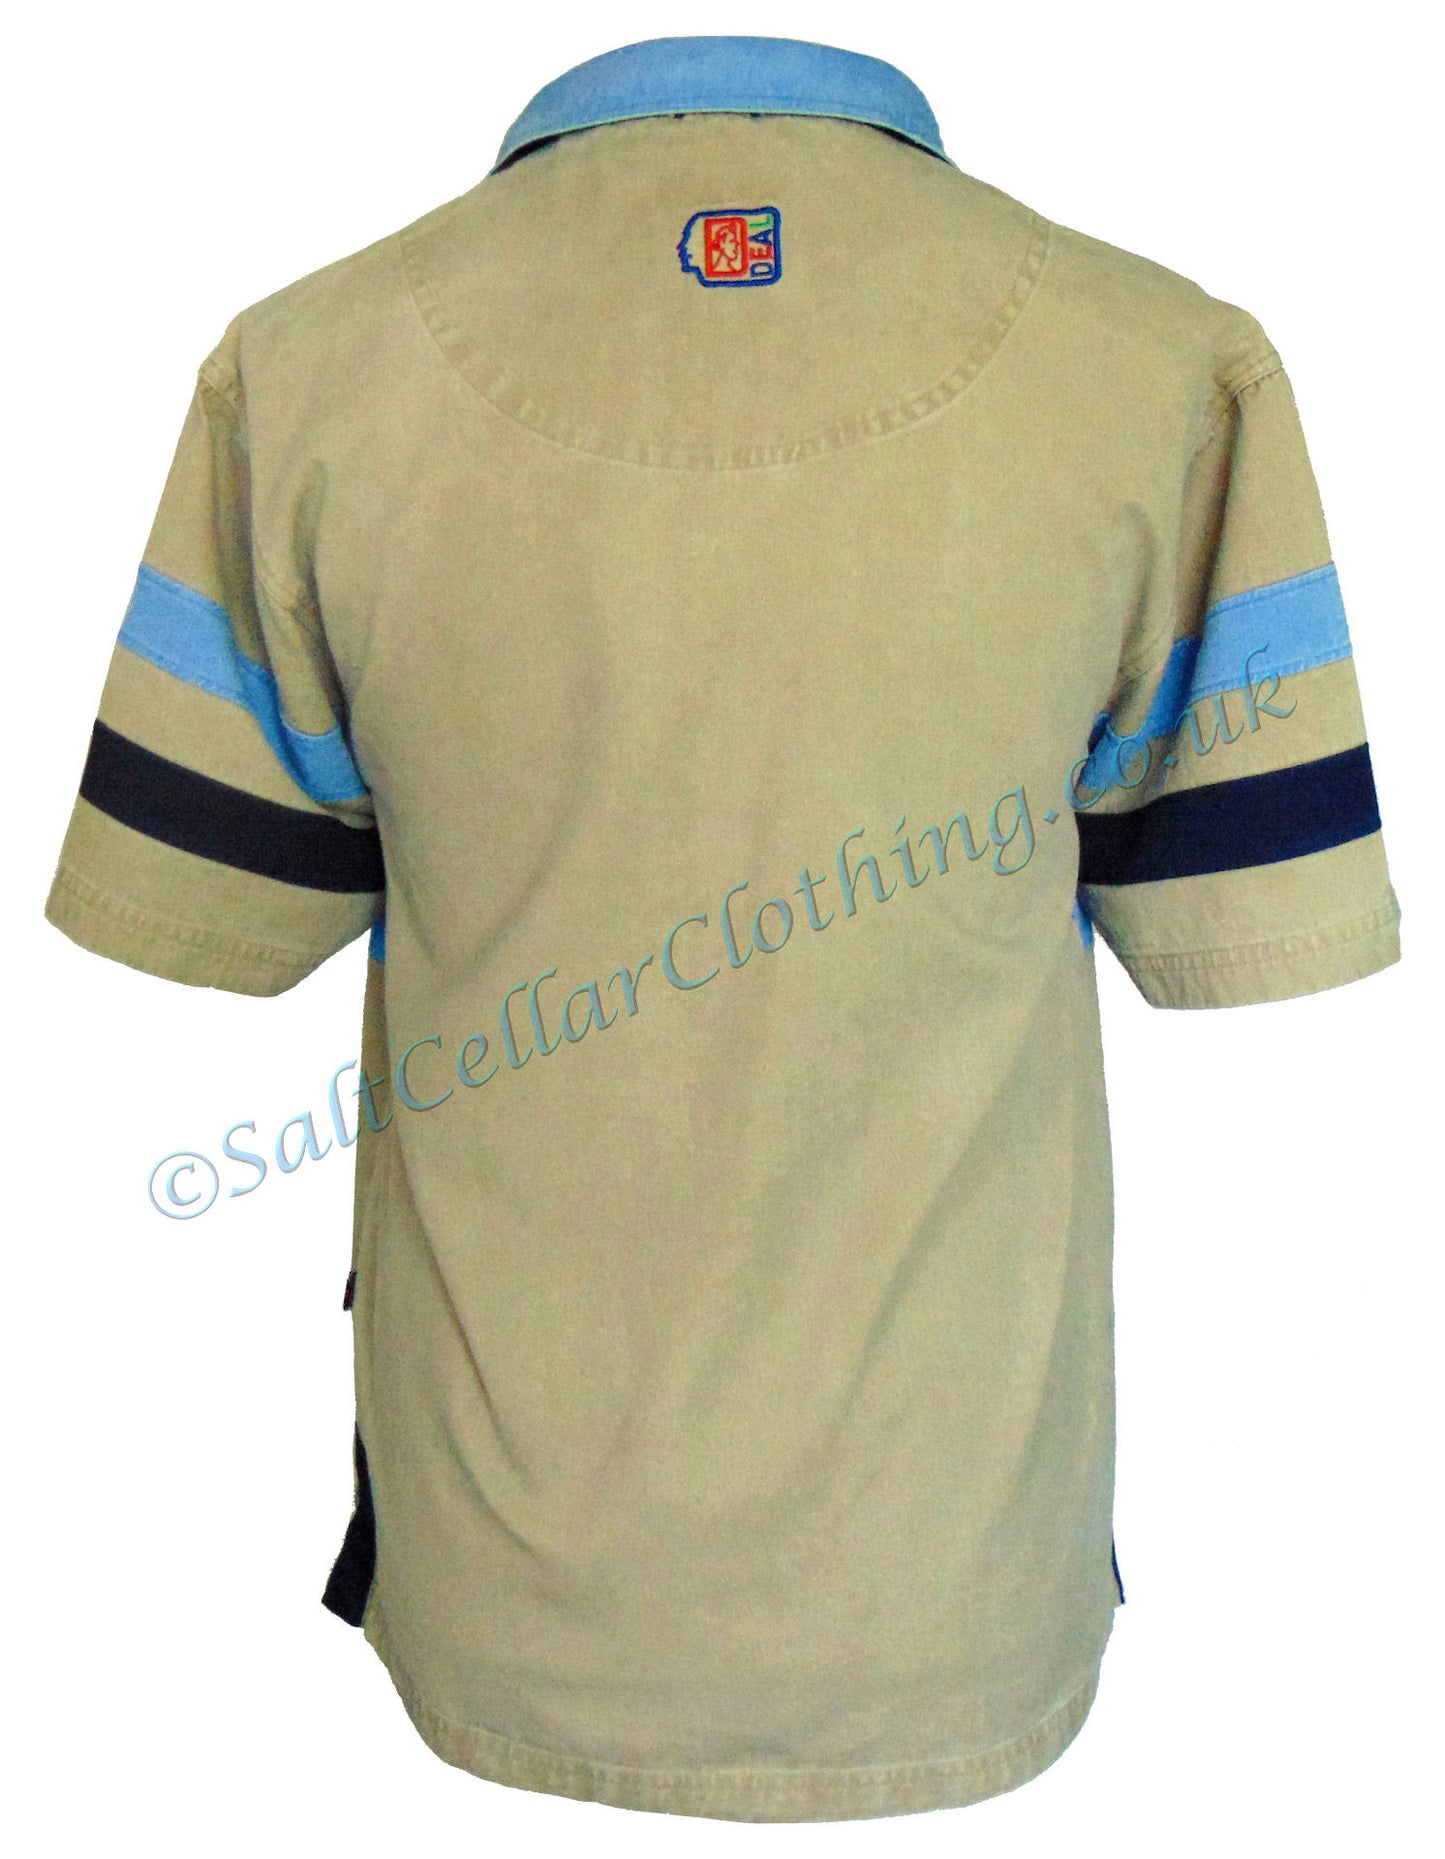 Deal Clothing Mens 'AS107' Short-Sleeved Stripe Panel Shirt - Sand